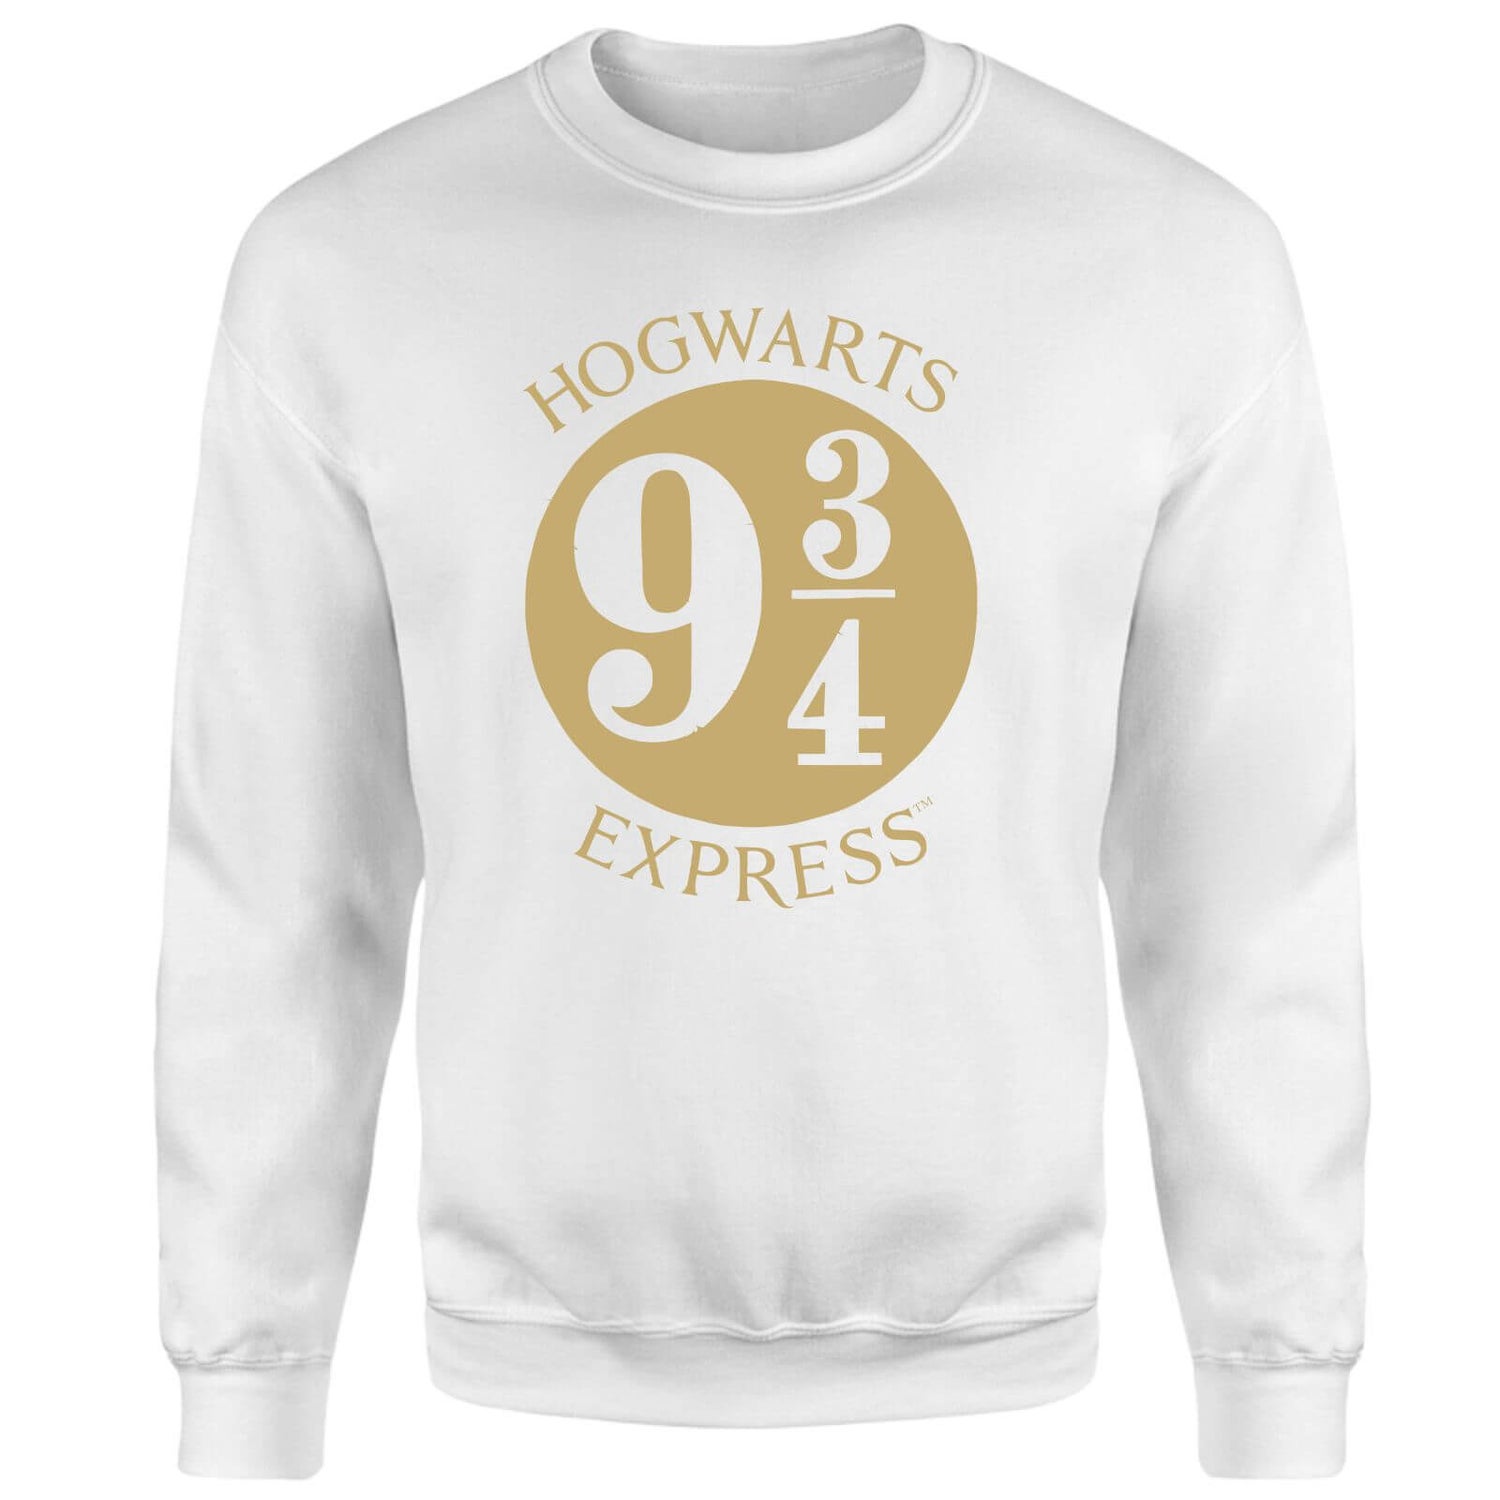 Harry Potter Platform Sweatshirt - White